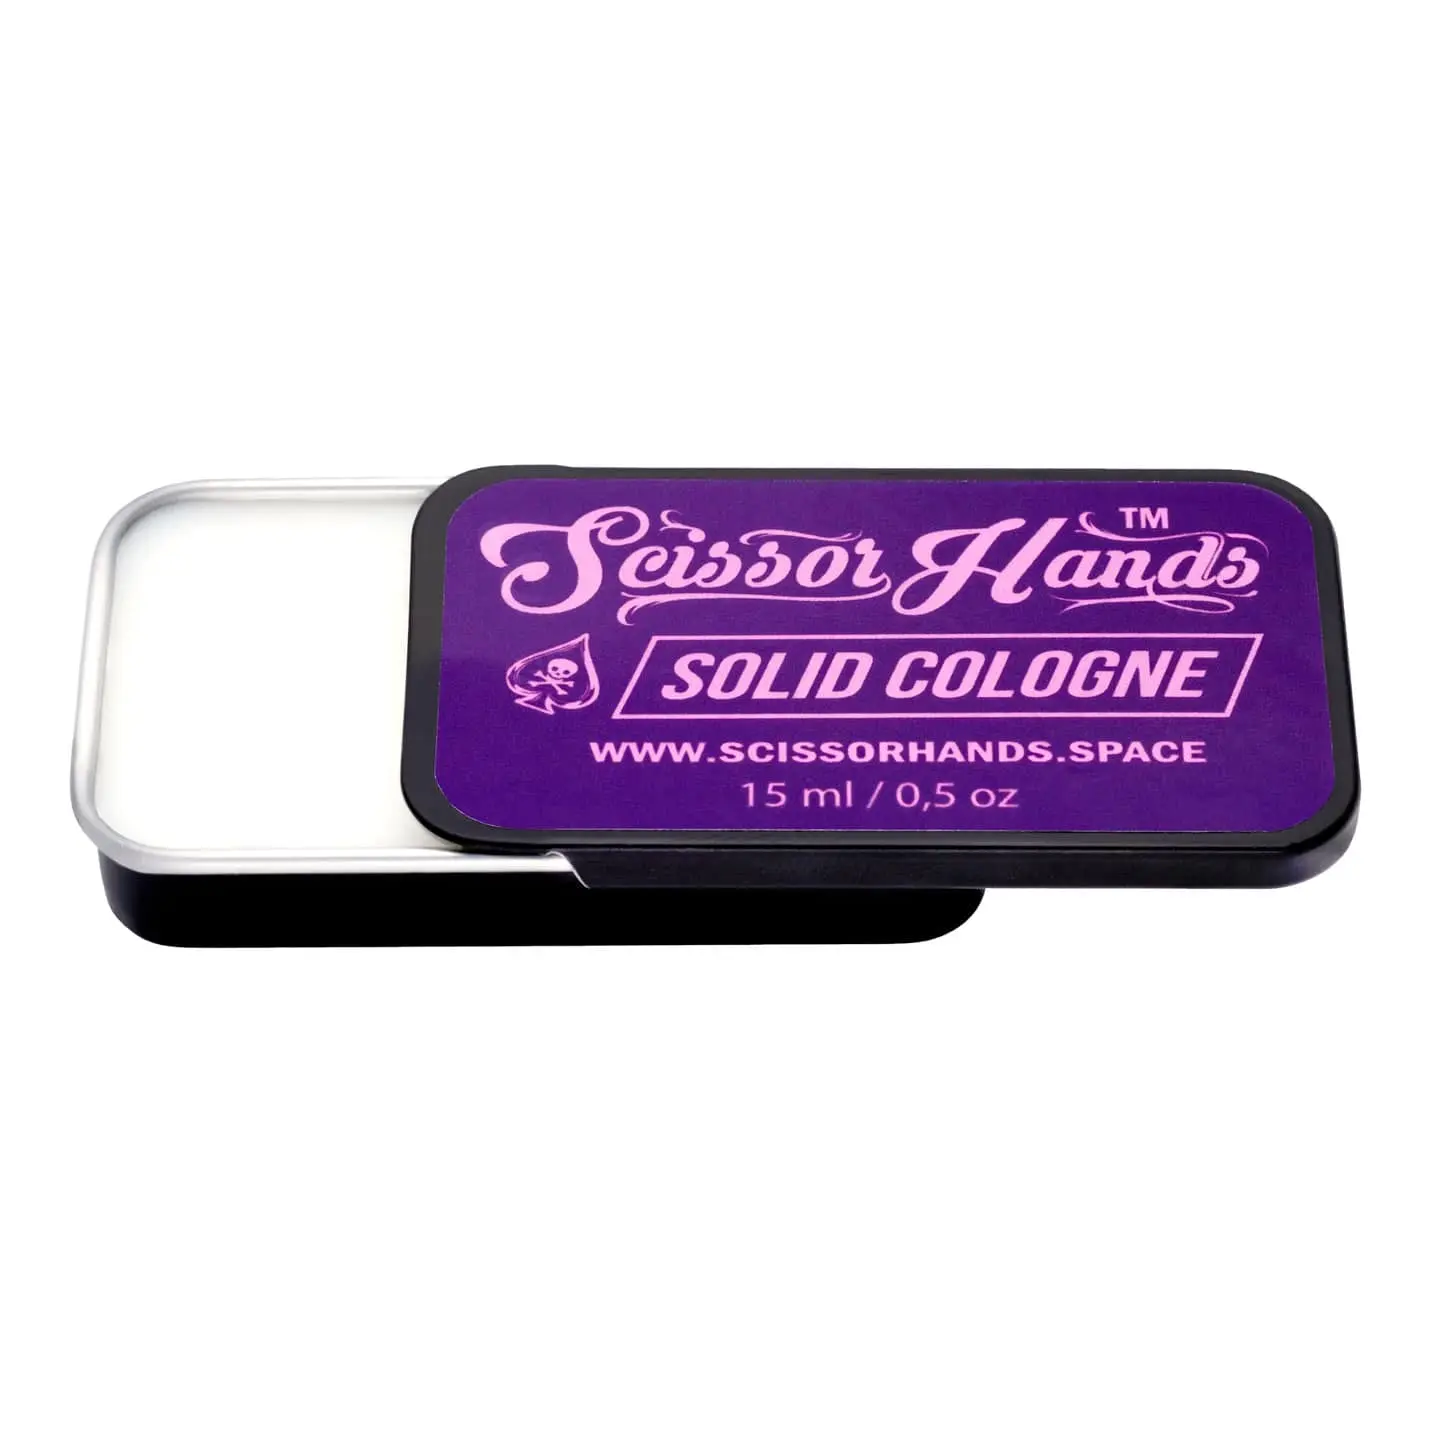 Solid cologne Purple